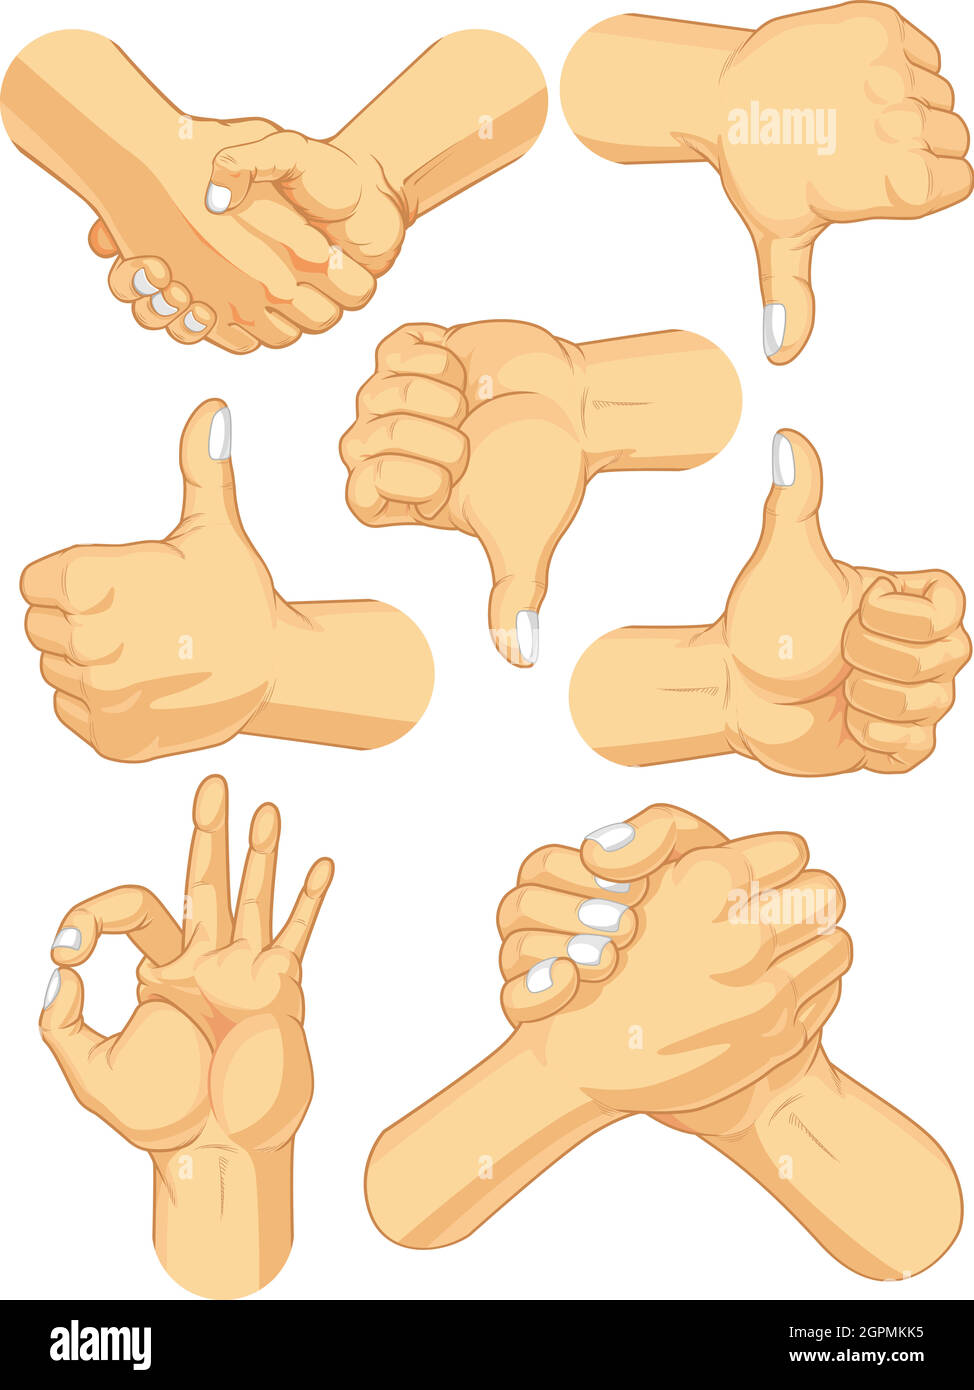 Hand Gesture Finger Sign Language Symbol Cartoon Illustration Drawing Stock Vector